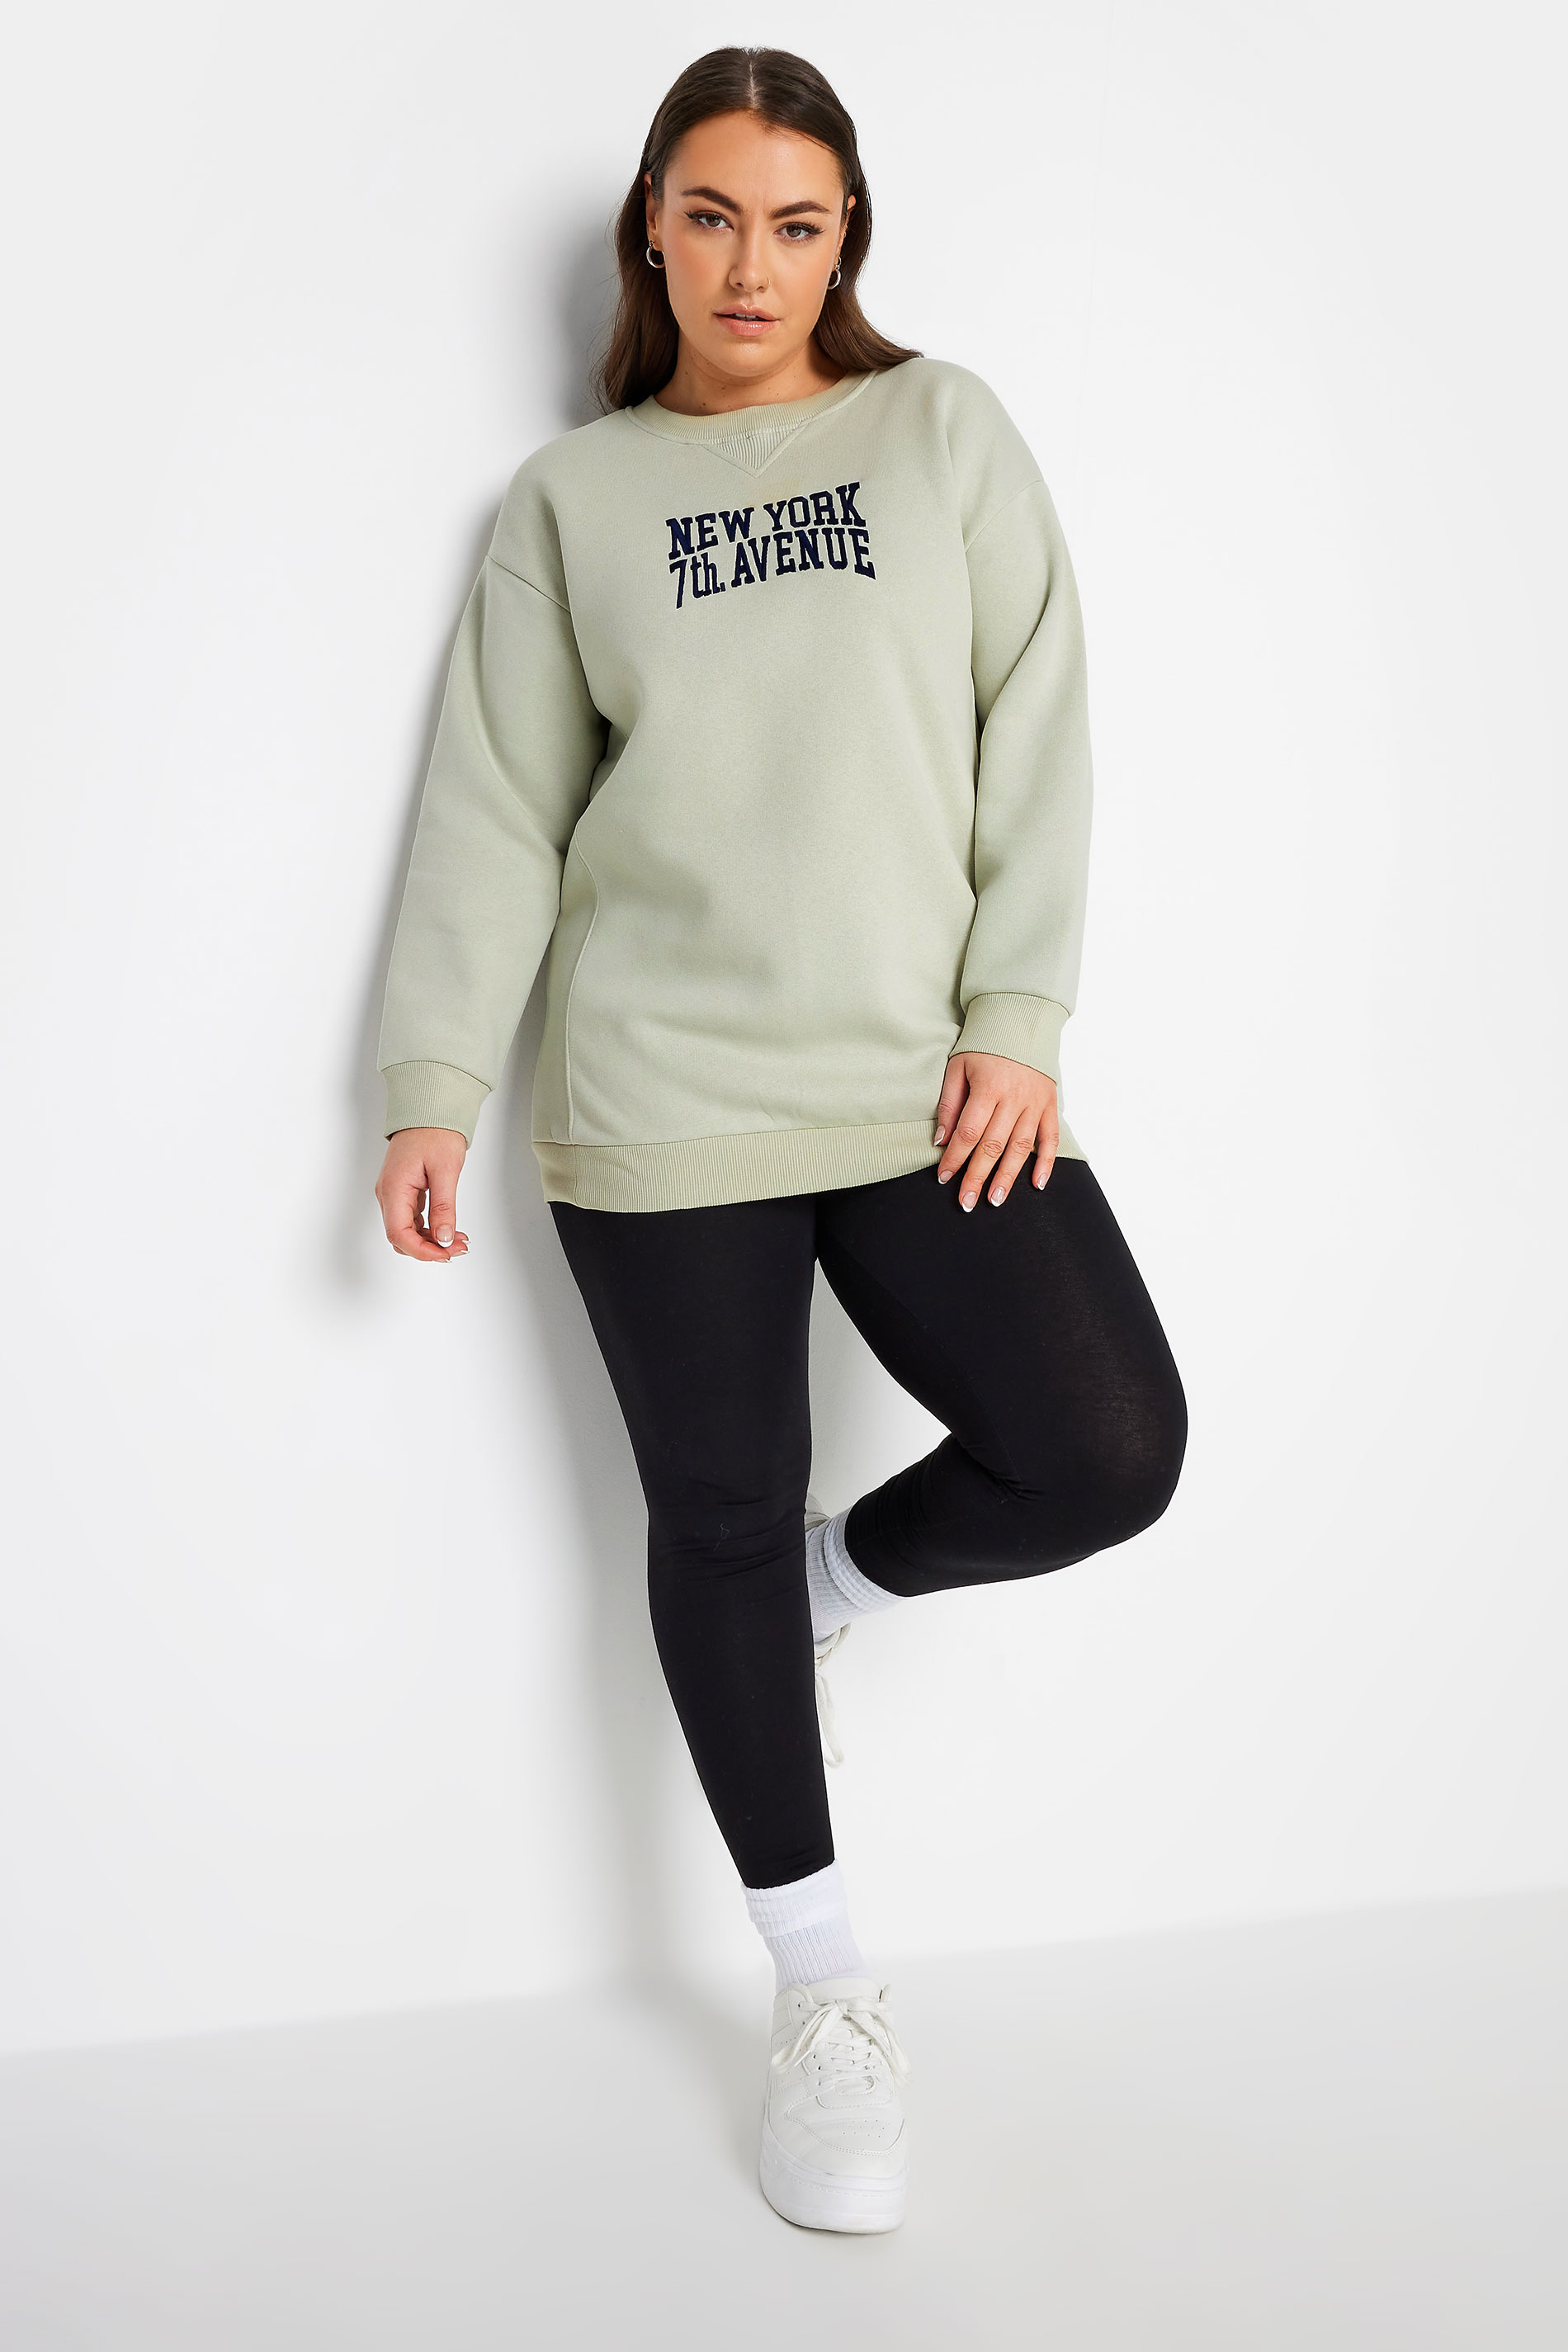 YOURS Curve Plus Size Light Grey 'New York' Slogan Sweatshirt | Yours Clothing  2